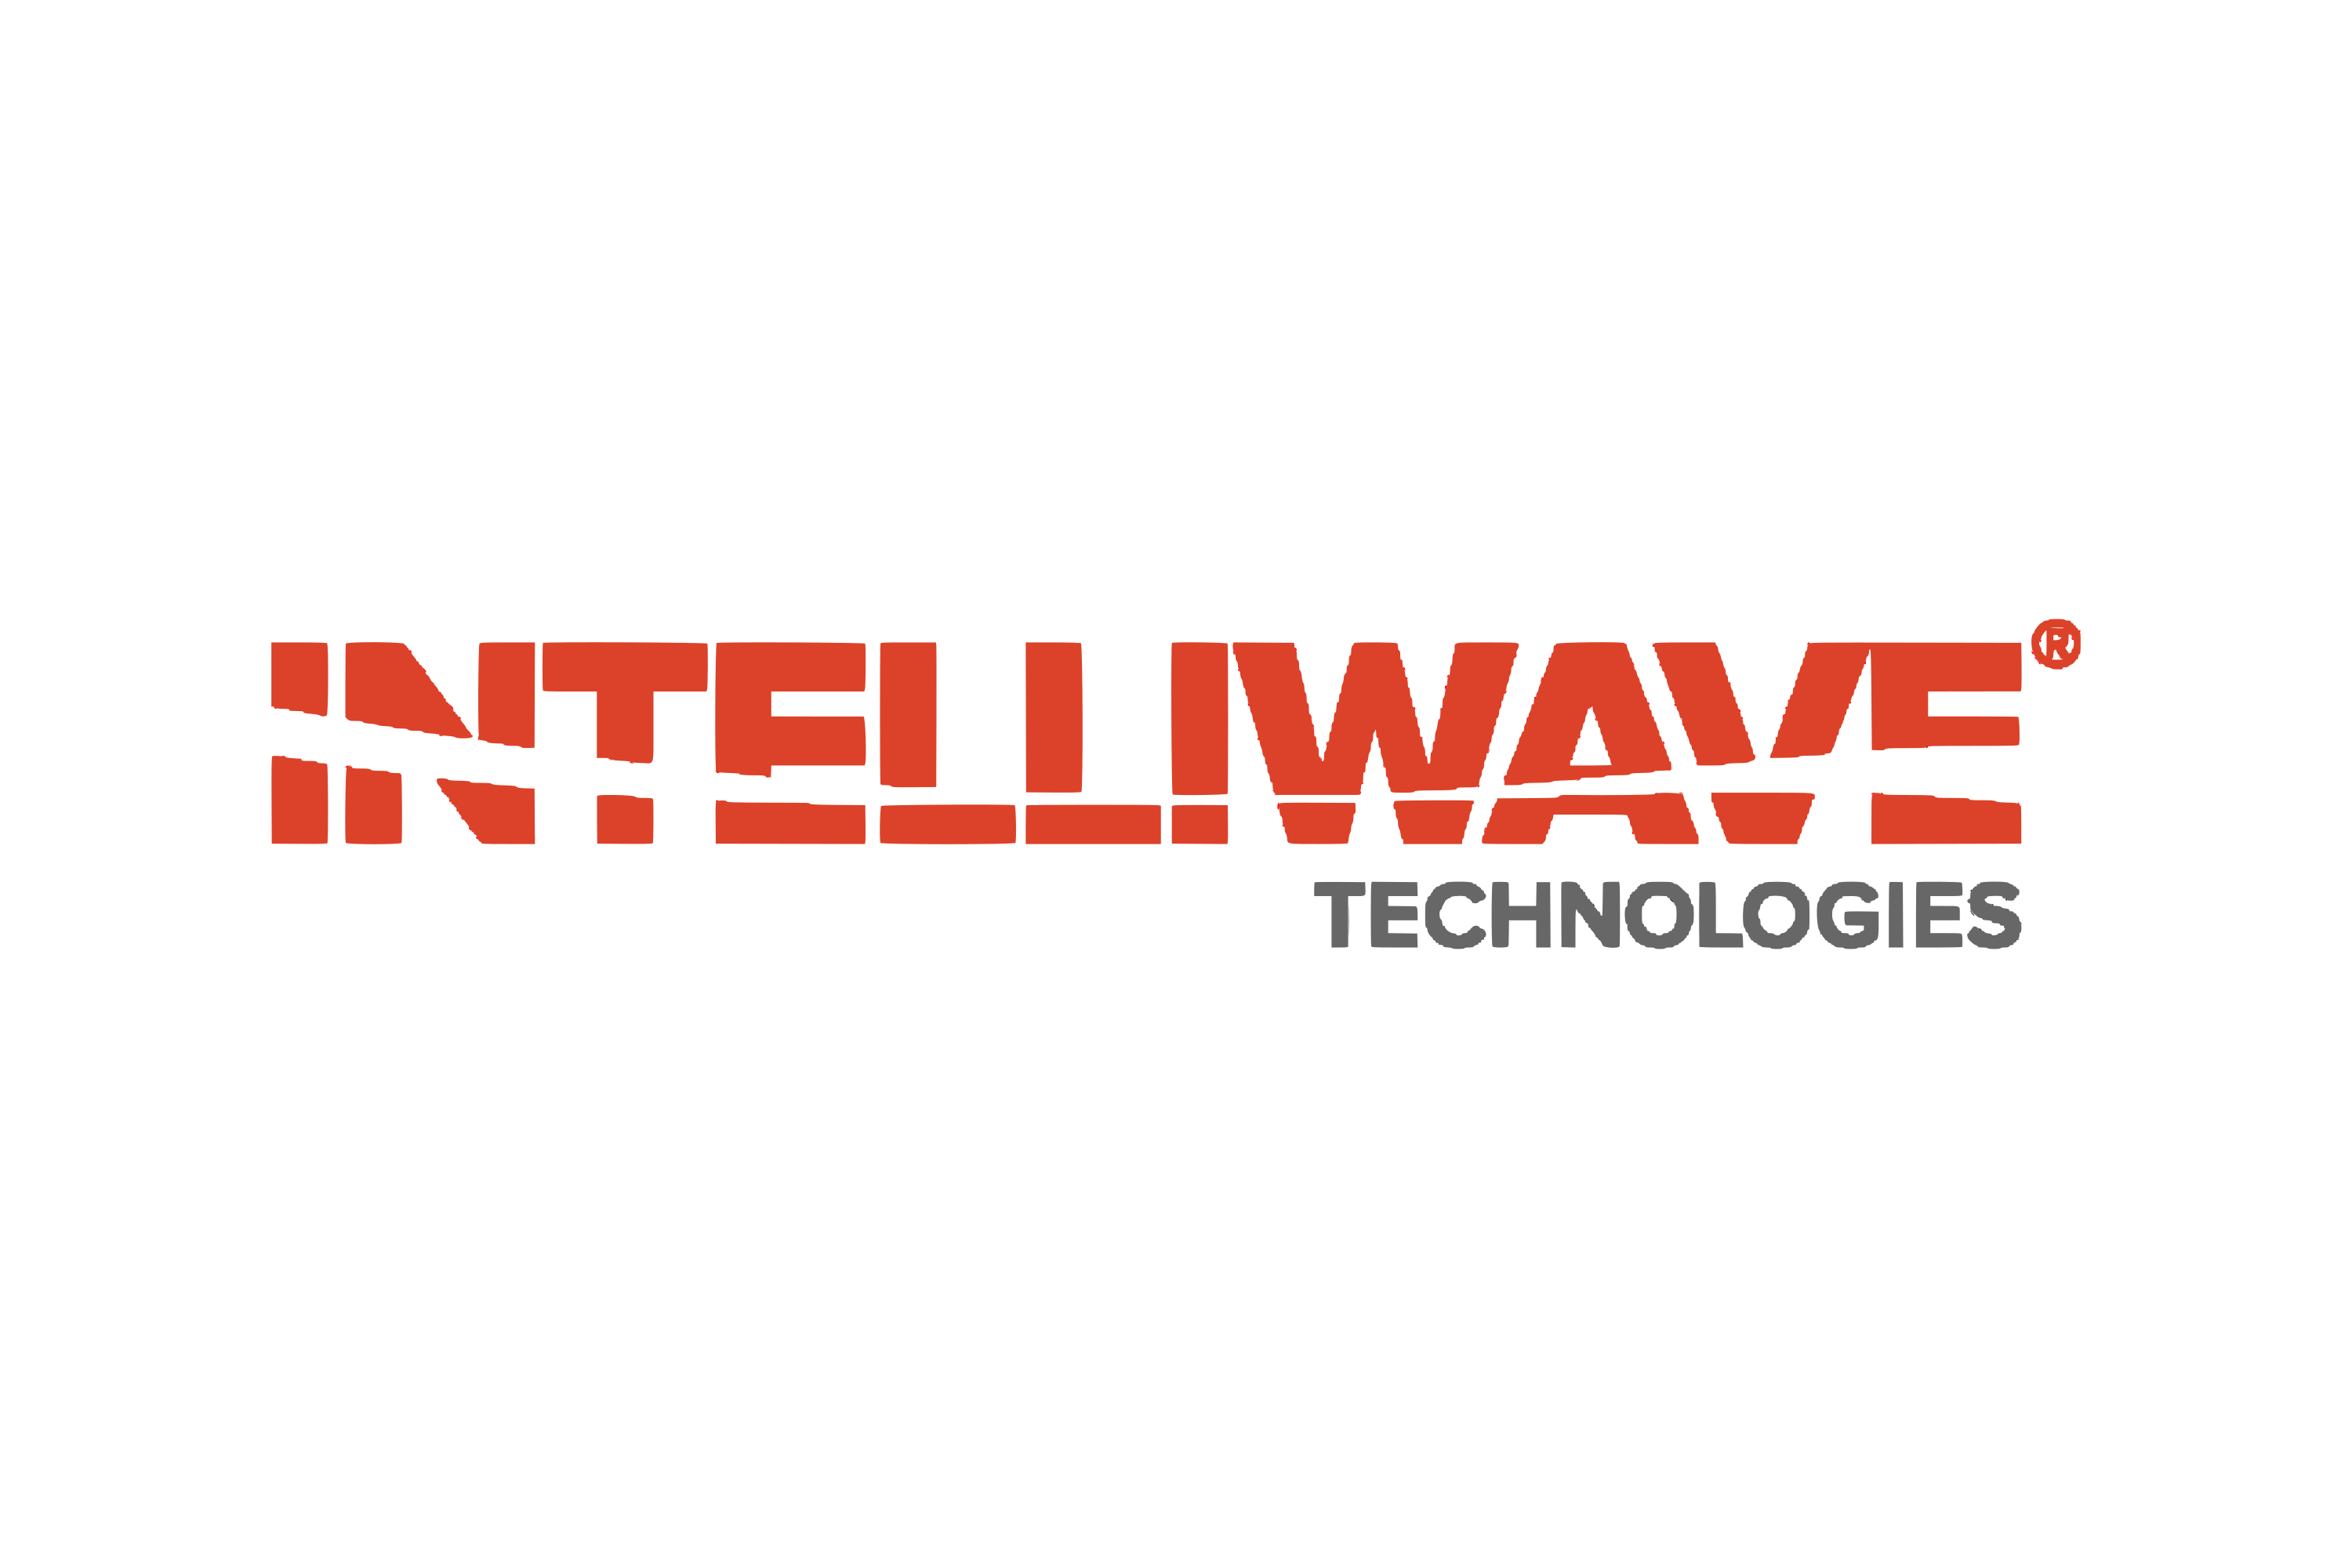 Download Intelliwave Technologies Logo in SVG Vector or PNG File Format